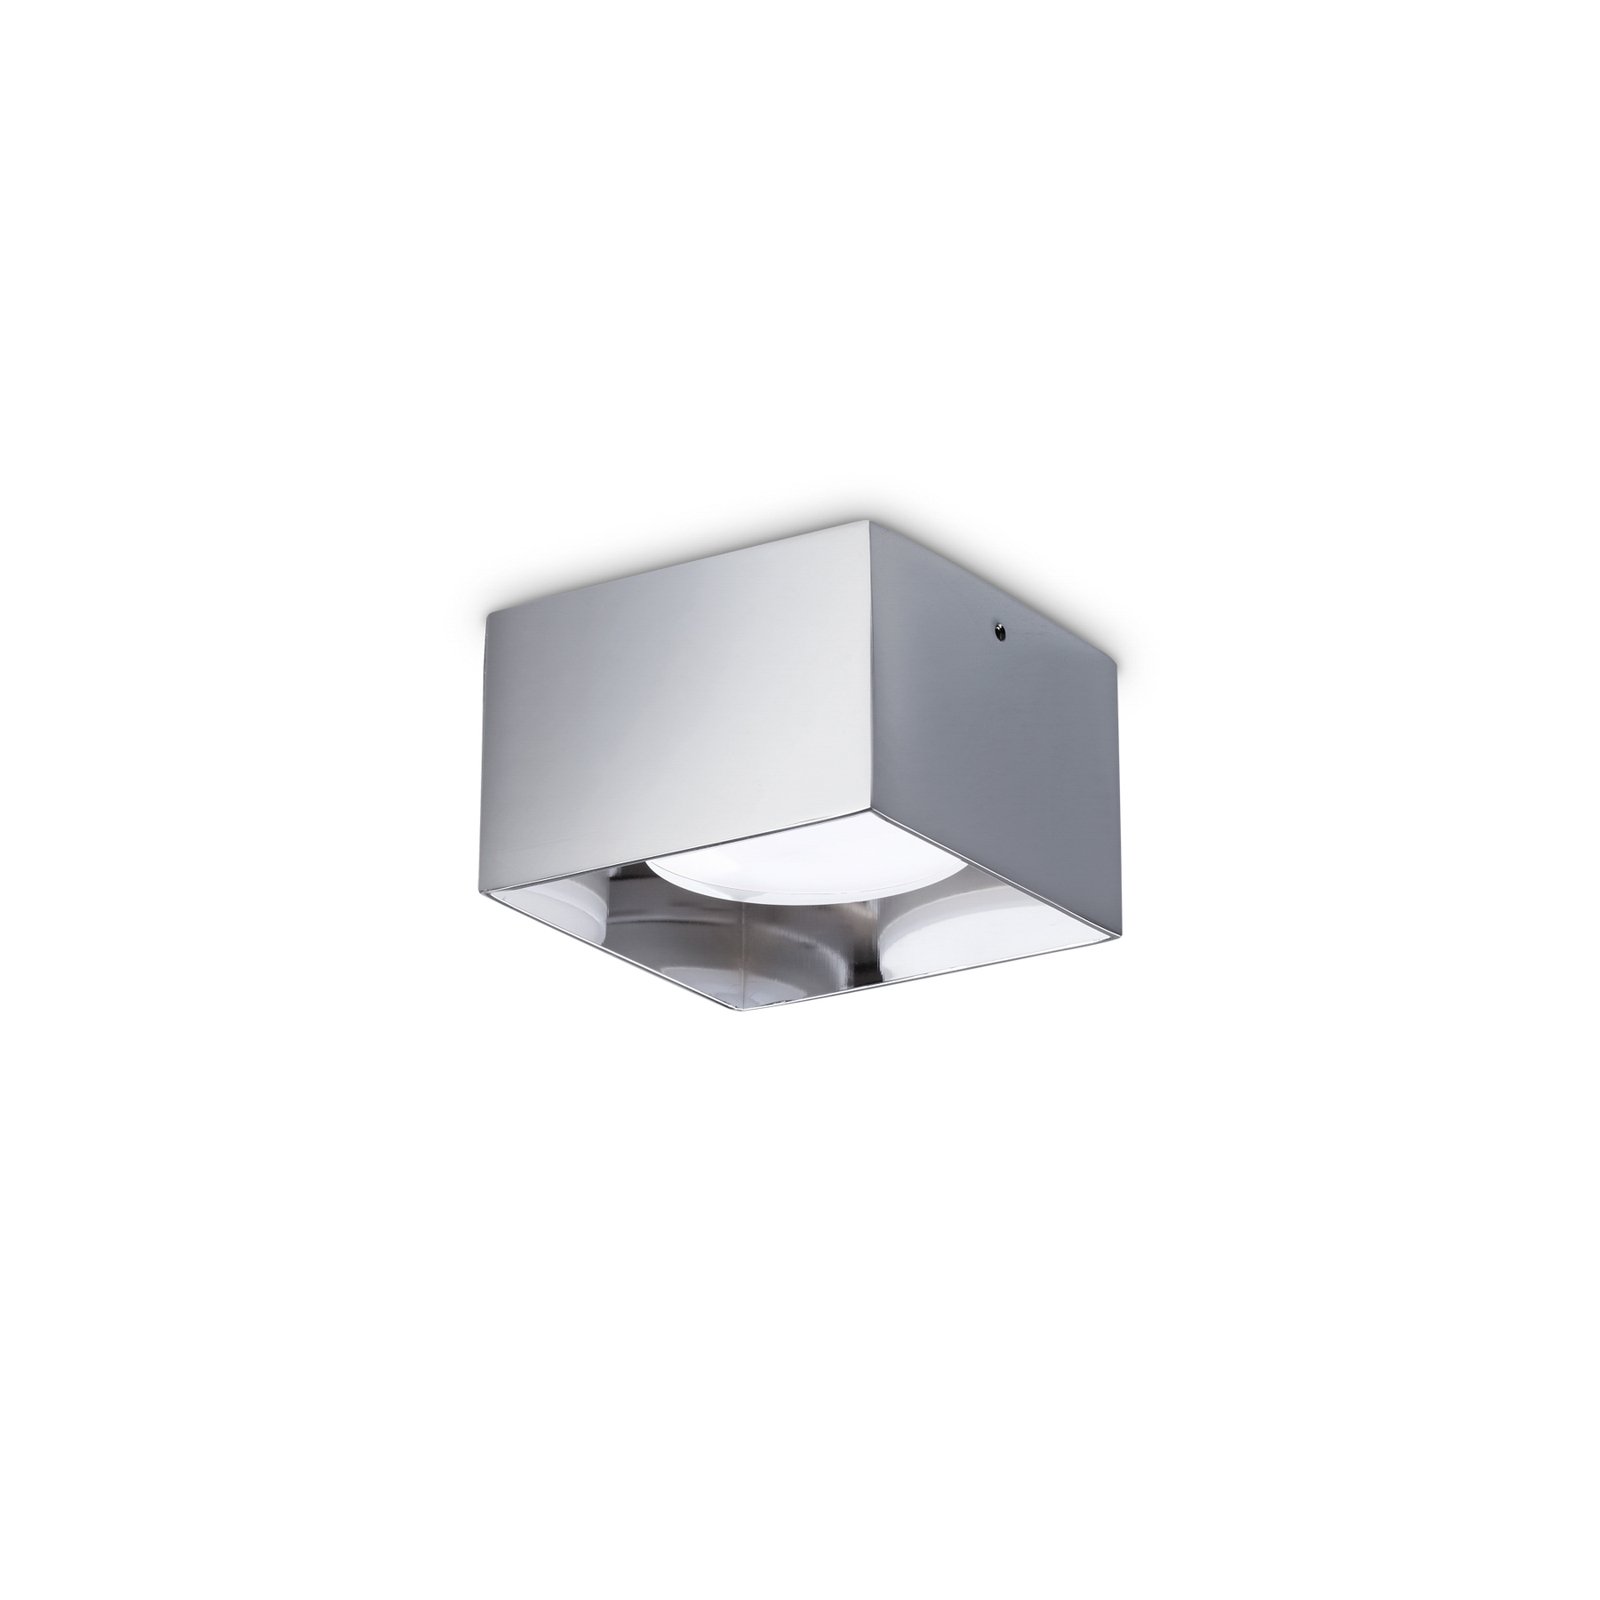 Ideal Lux Downlight Spike Square, chromfarben, Alu, 10x10 cm